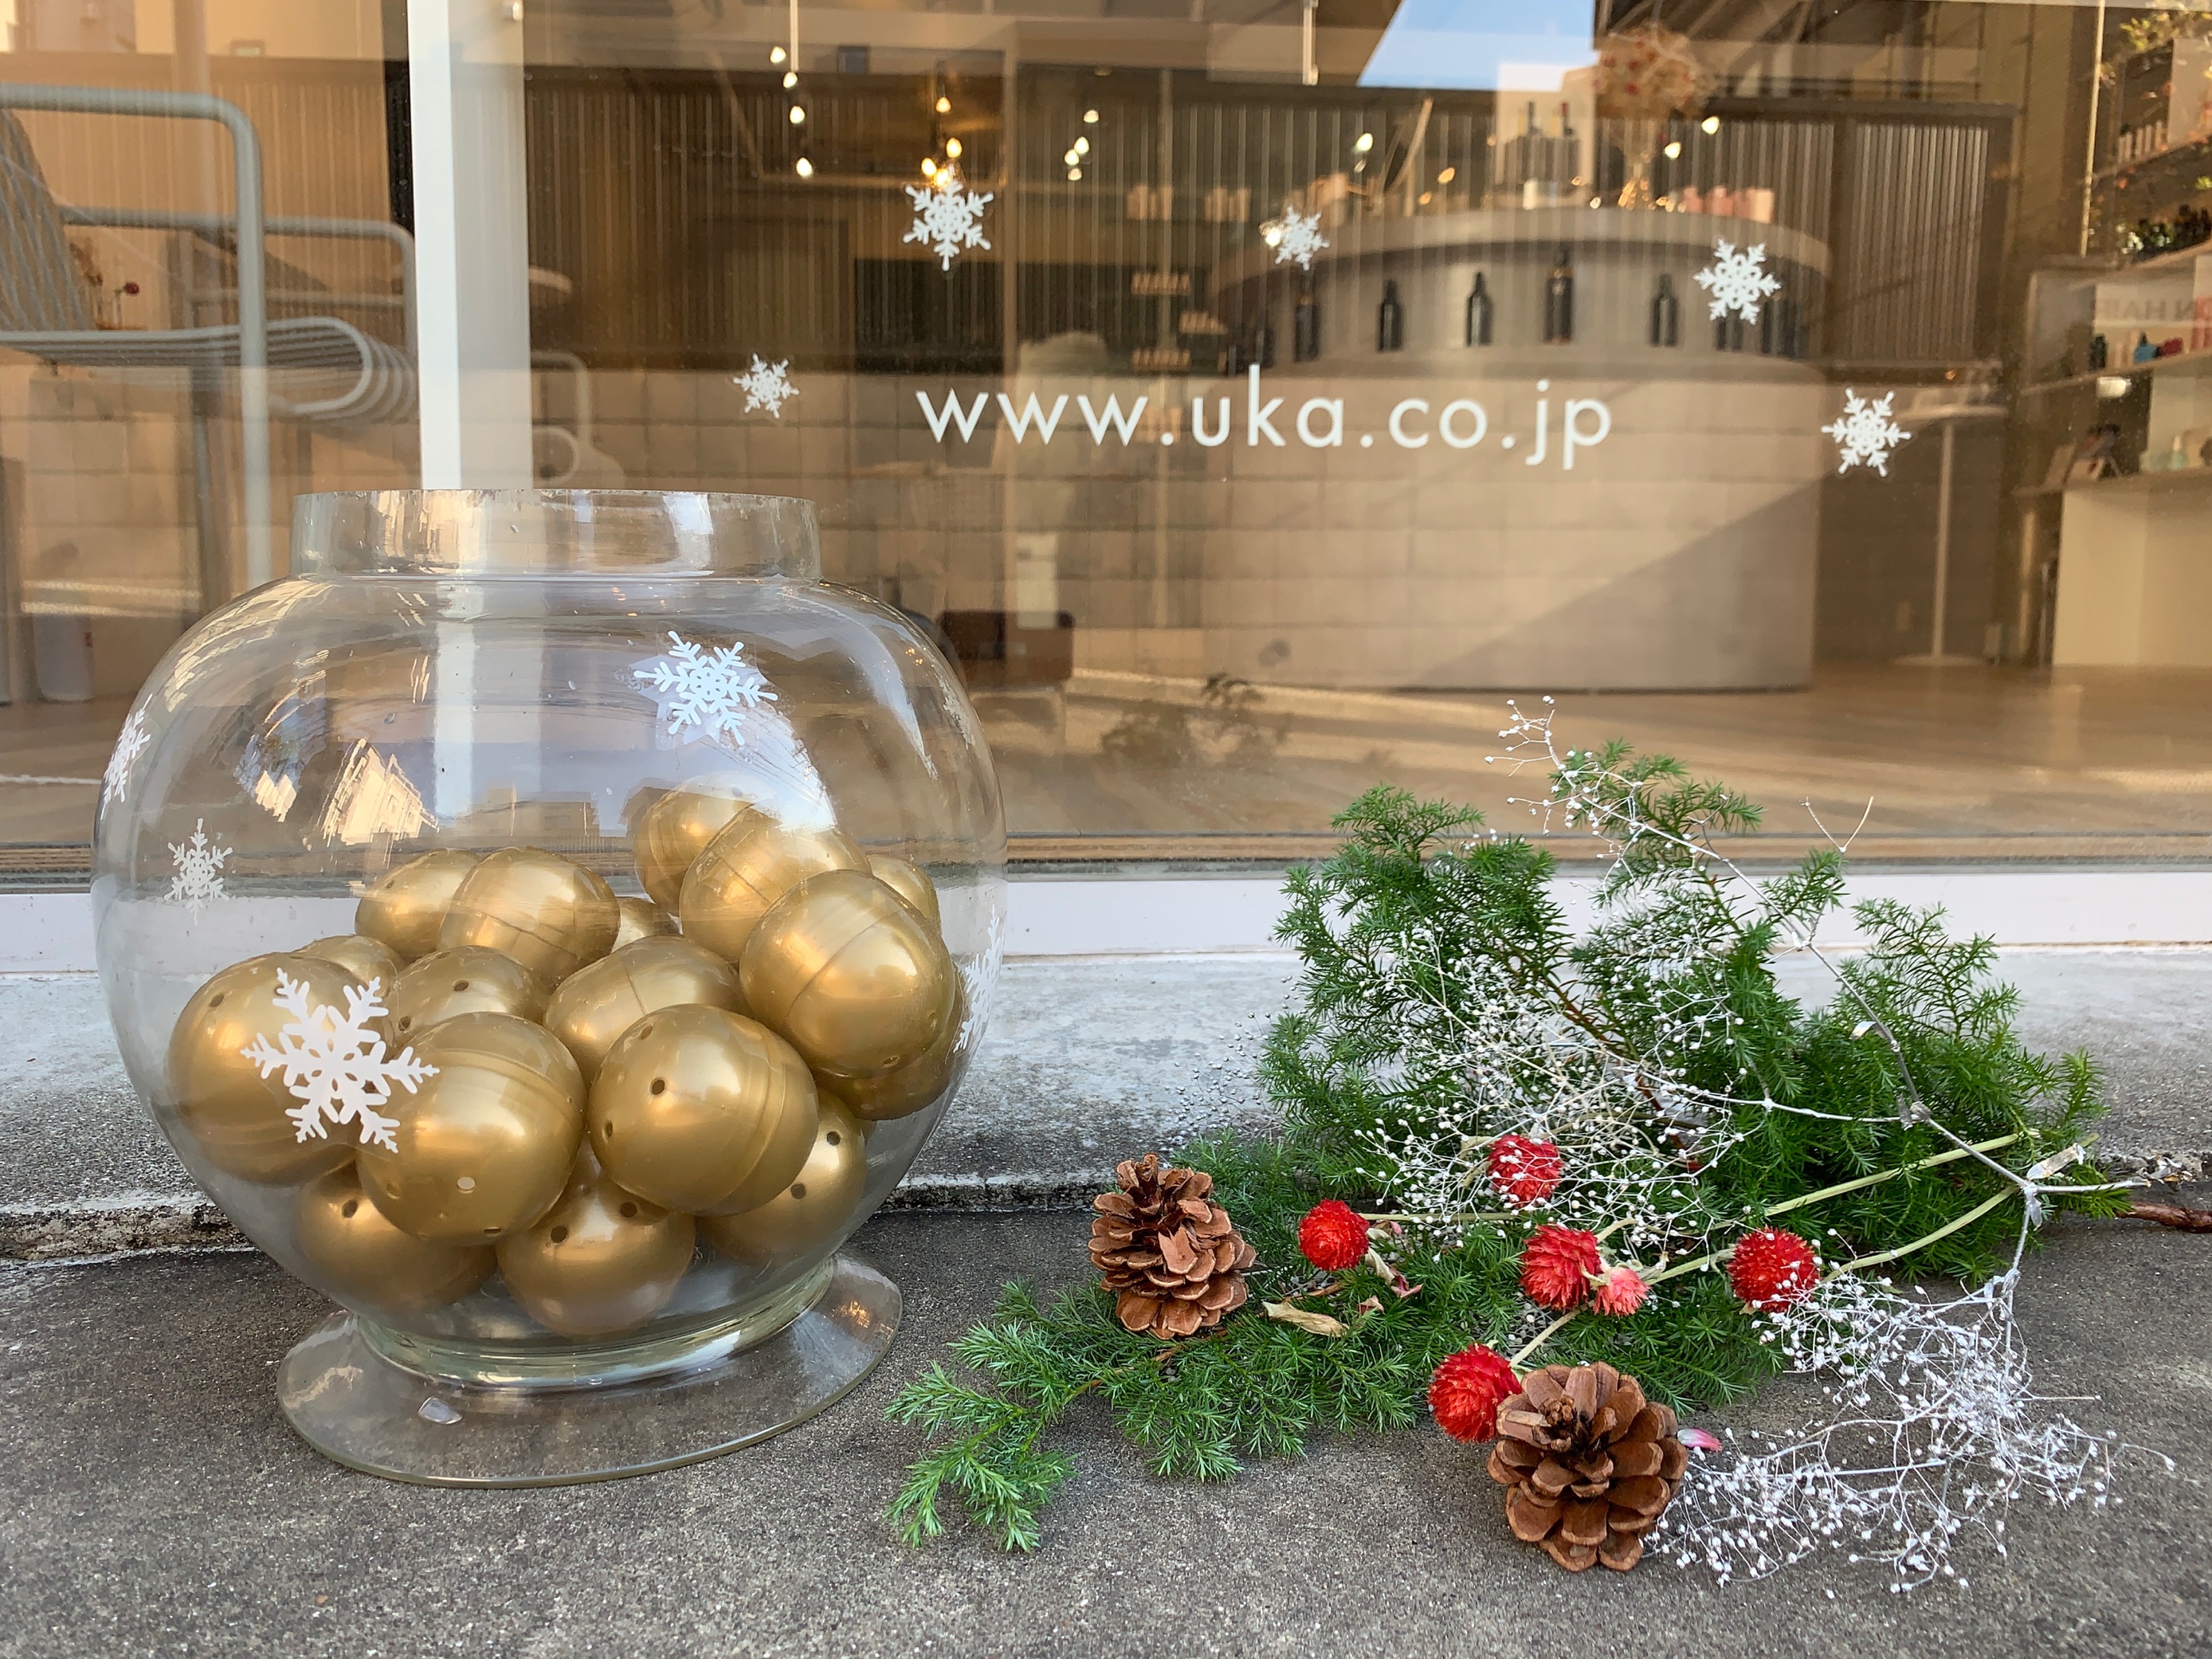 Uka Store Omotesandoからクリスマスプレゼントが当たるチャンス ストア限定 抽選キャンペーンを12月27日まで開催中 株式会社ウカのプレスリリース